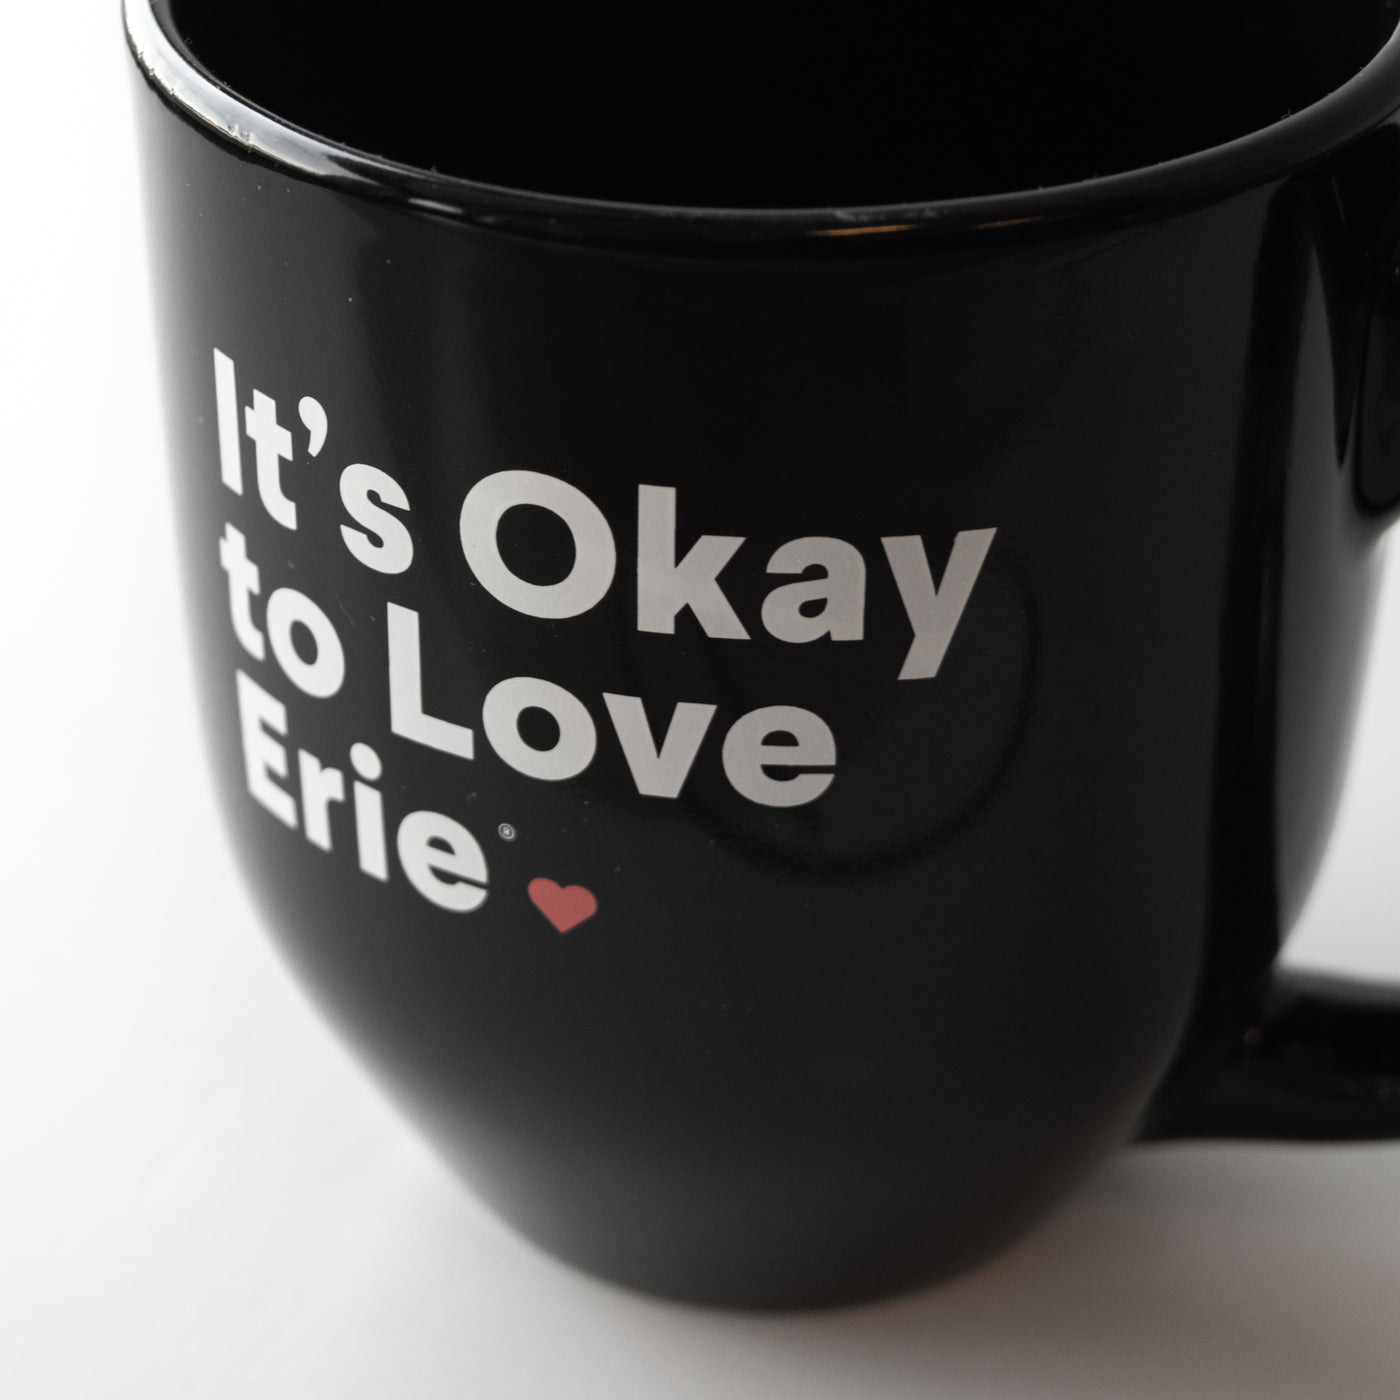 It's Okay to Love Erie® Mug